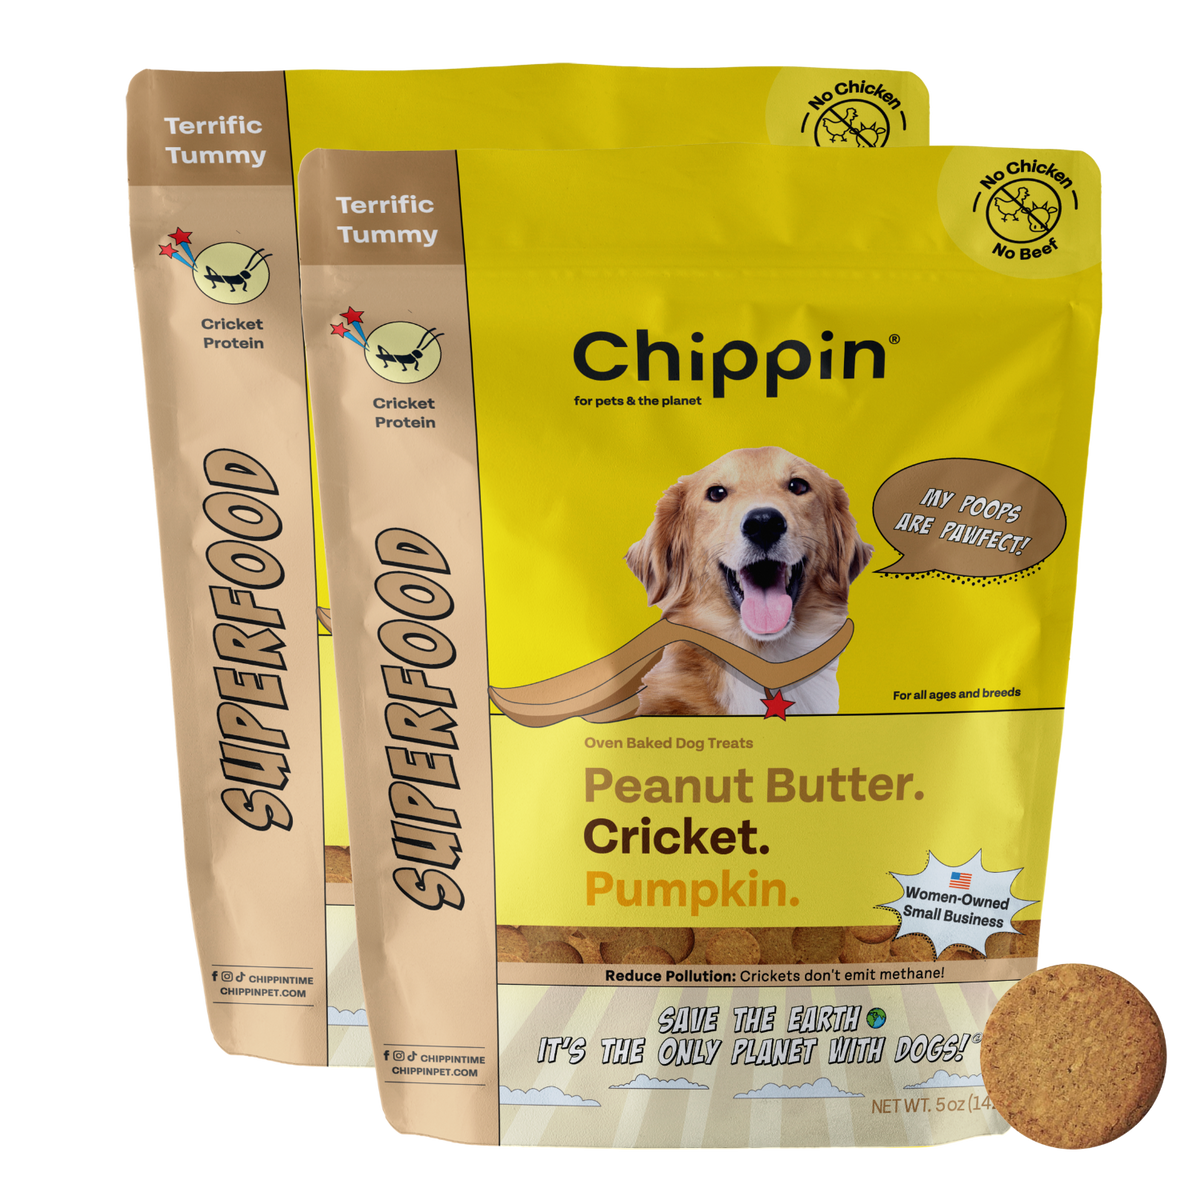 Superfood Dog Treats: Peanut Butter, Cricket, and Pumpkin, 2-pack